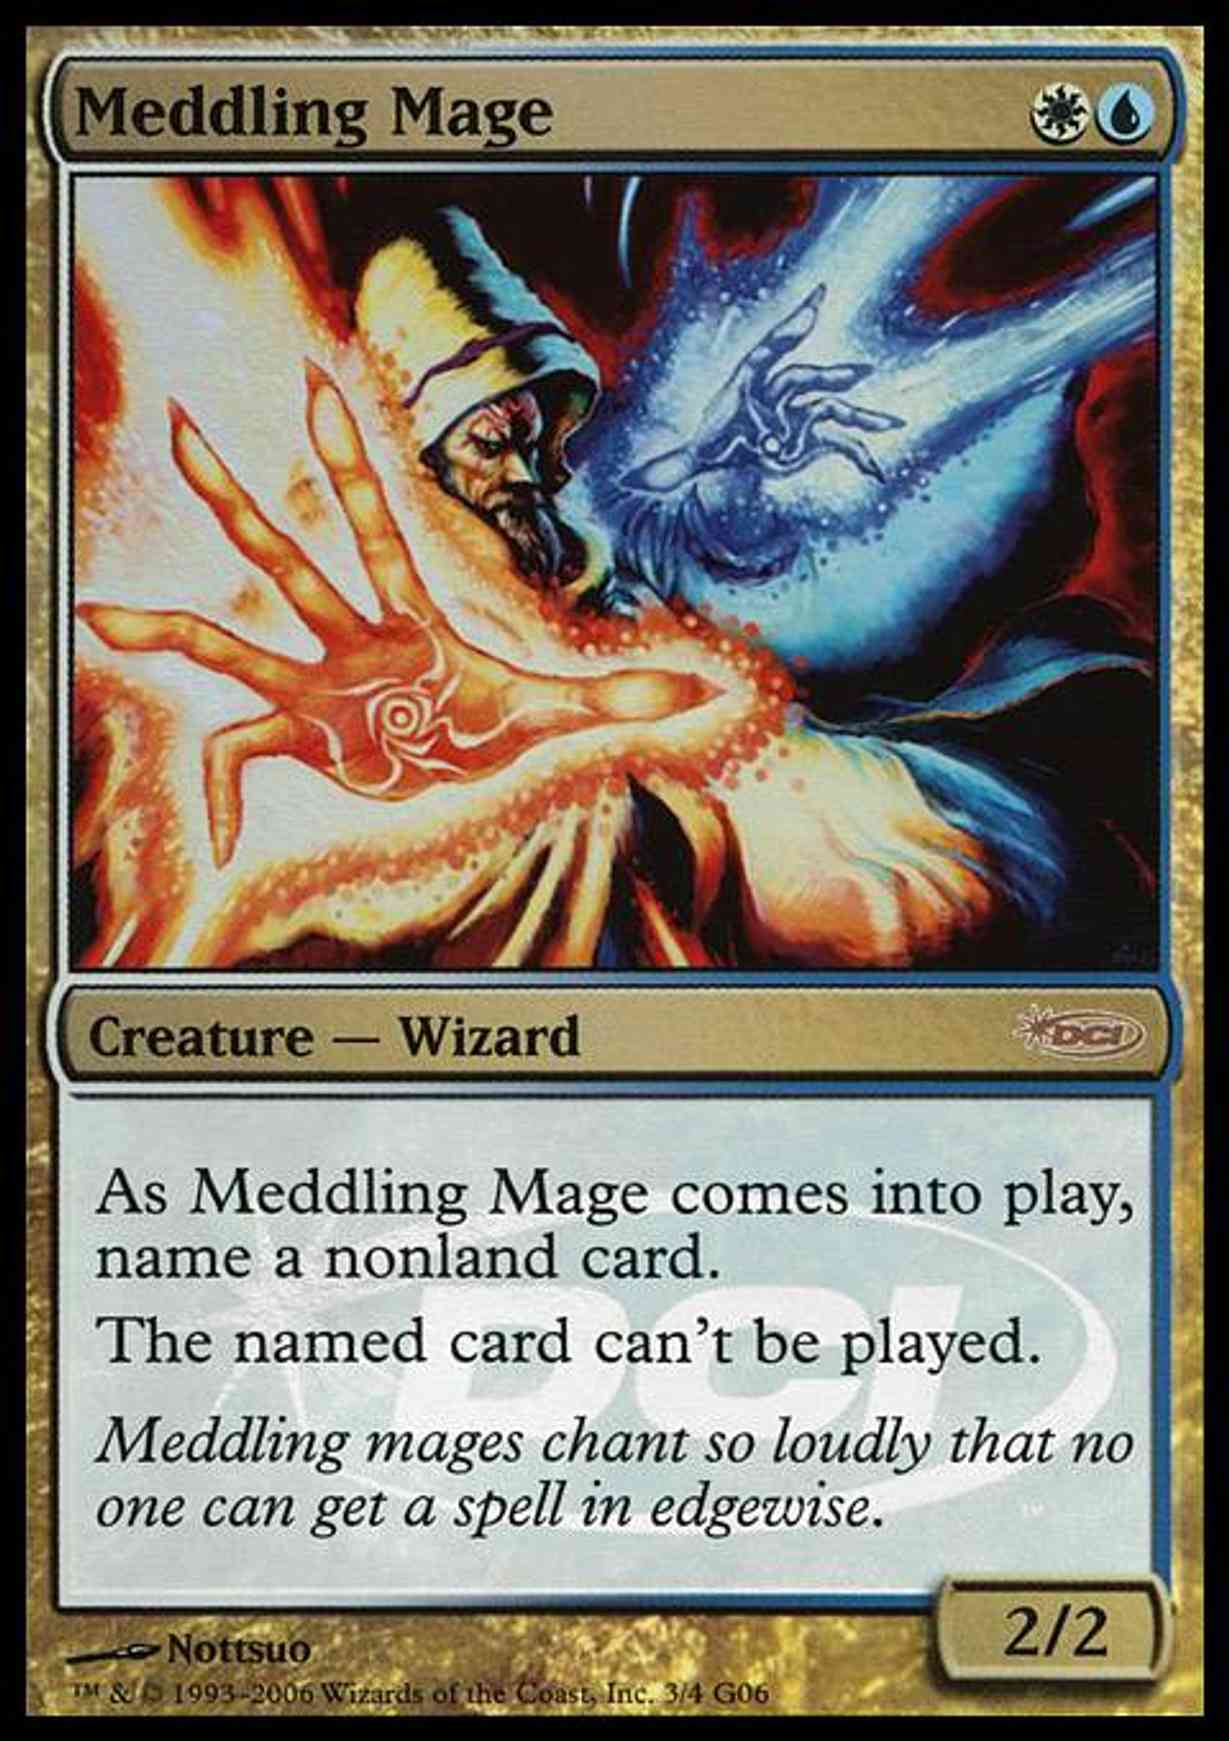 Meddling Mage magic card front